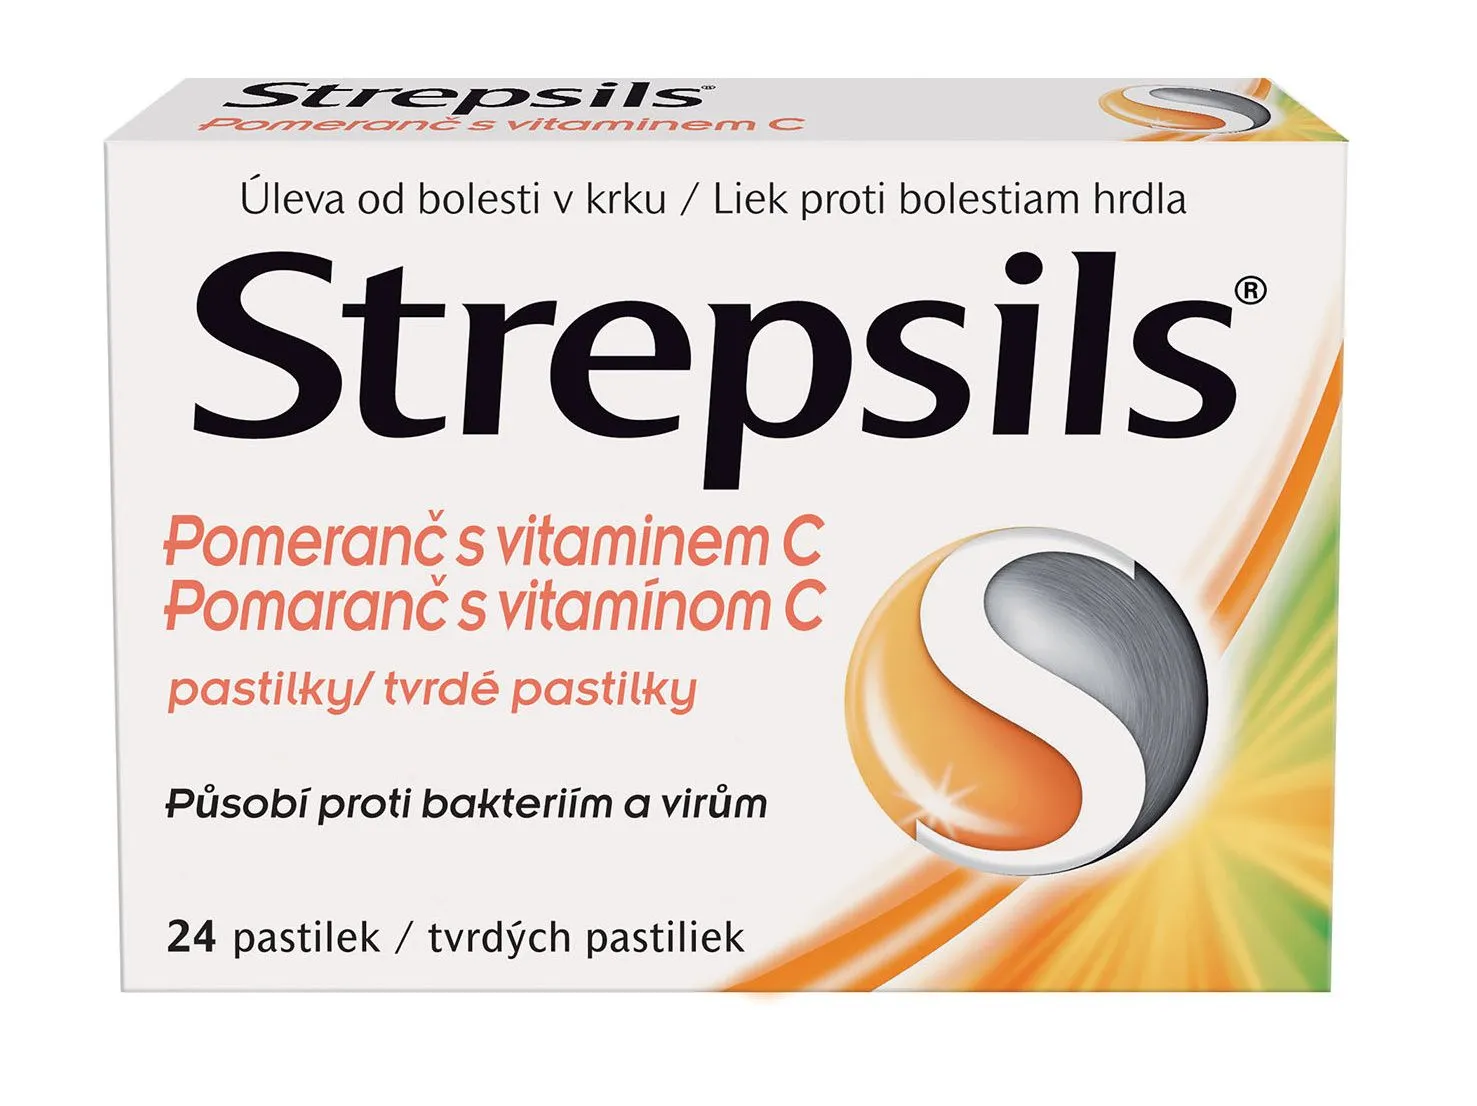 Strepsils Pomeranč s vitaminem C 24 pastilek